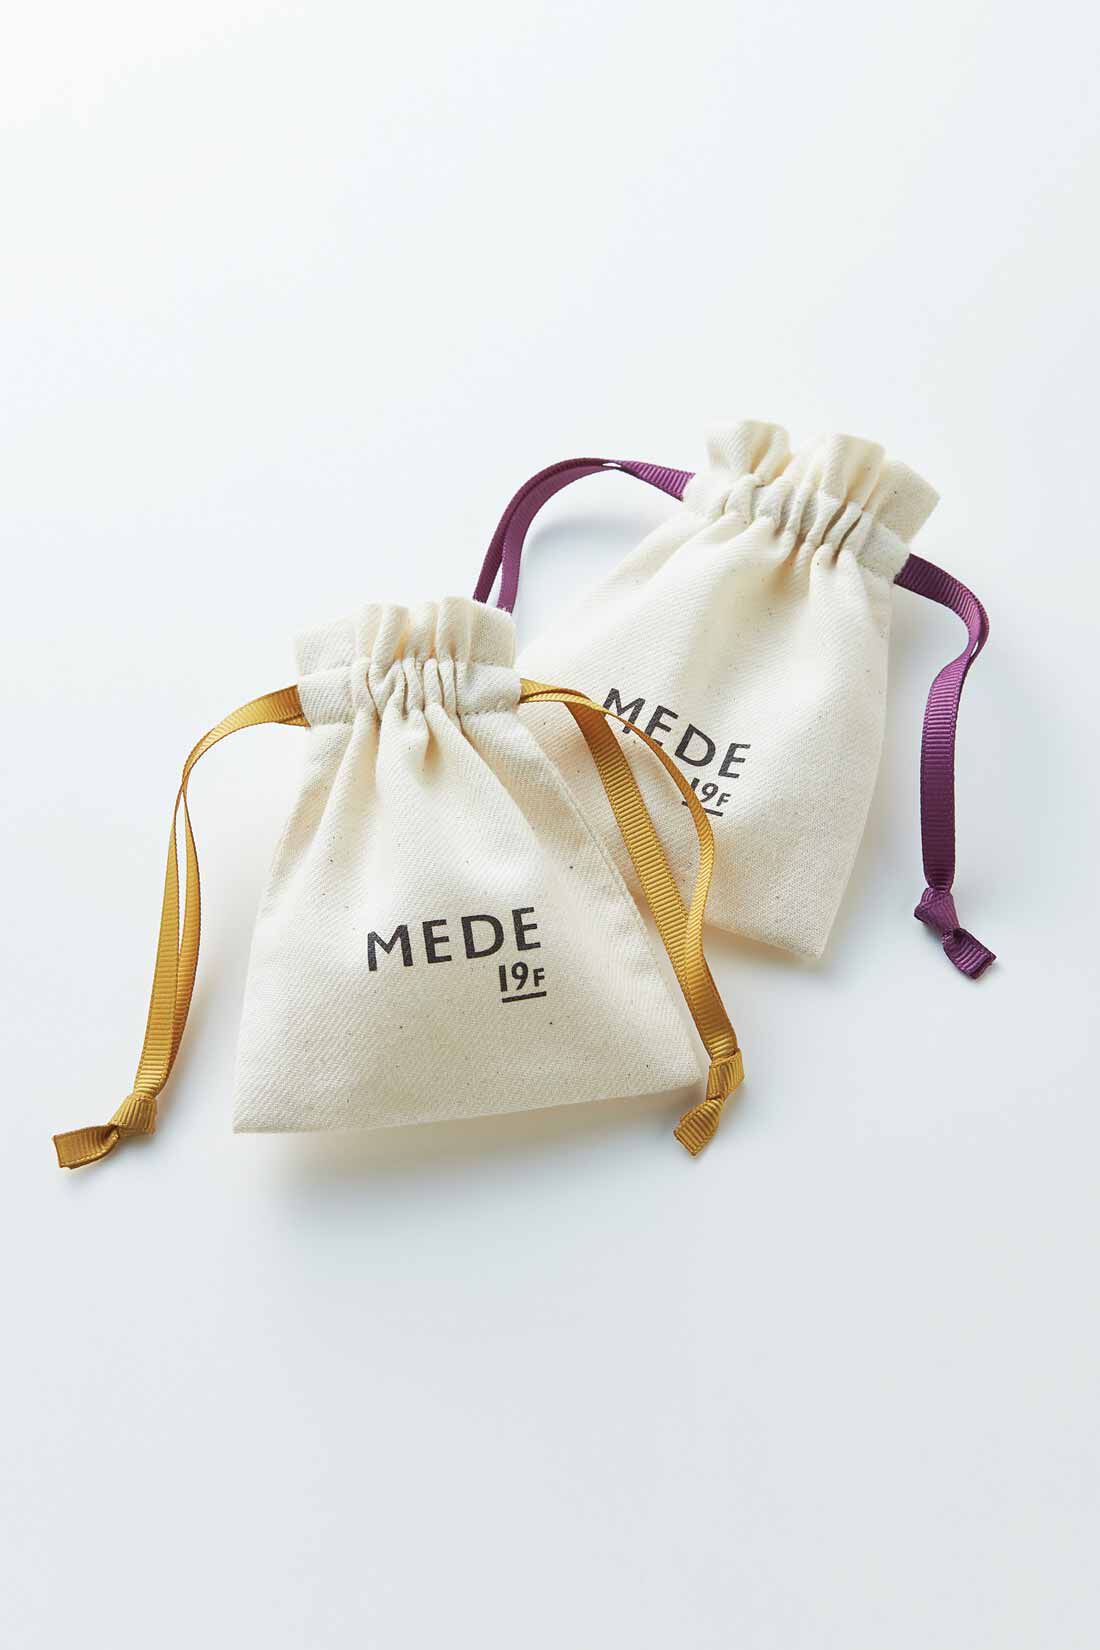 MEDE19F|YPAC for MEDE19F　フランス製陶器ボタンイヤリング type.07|MEDE19Fオリジナルきんちゃくに入れてお届けします。